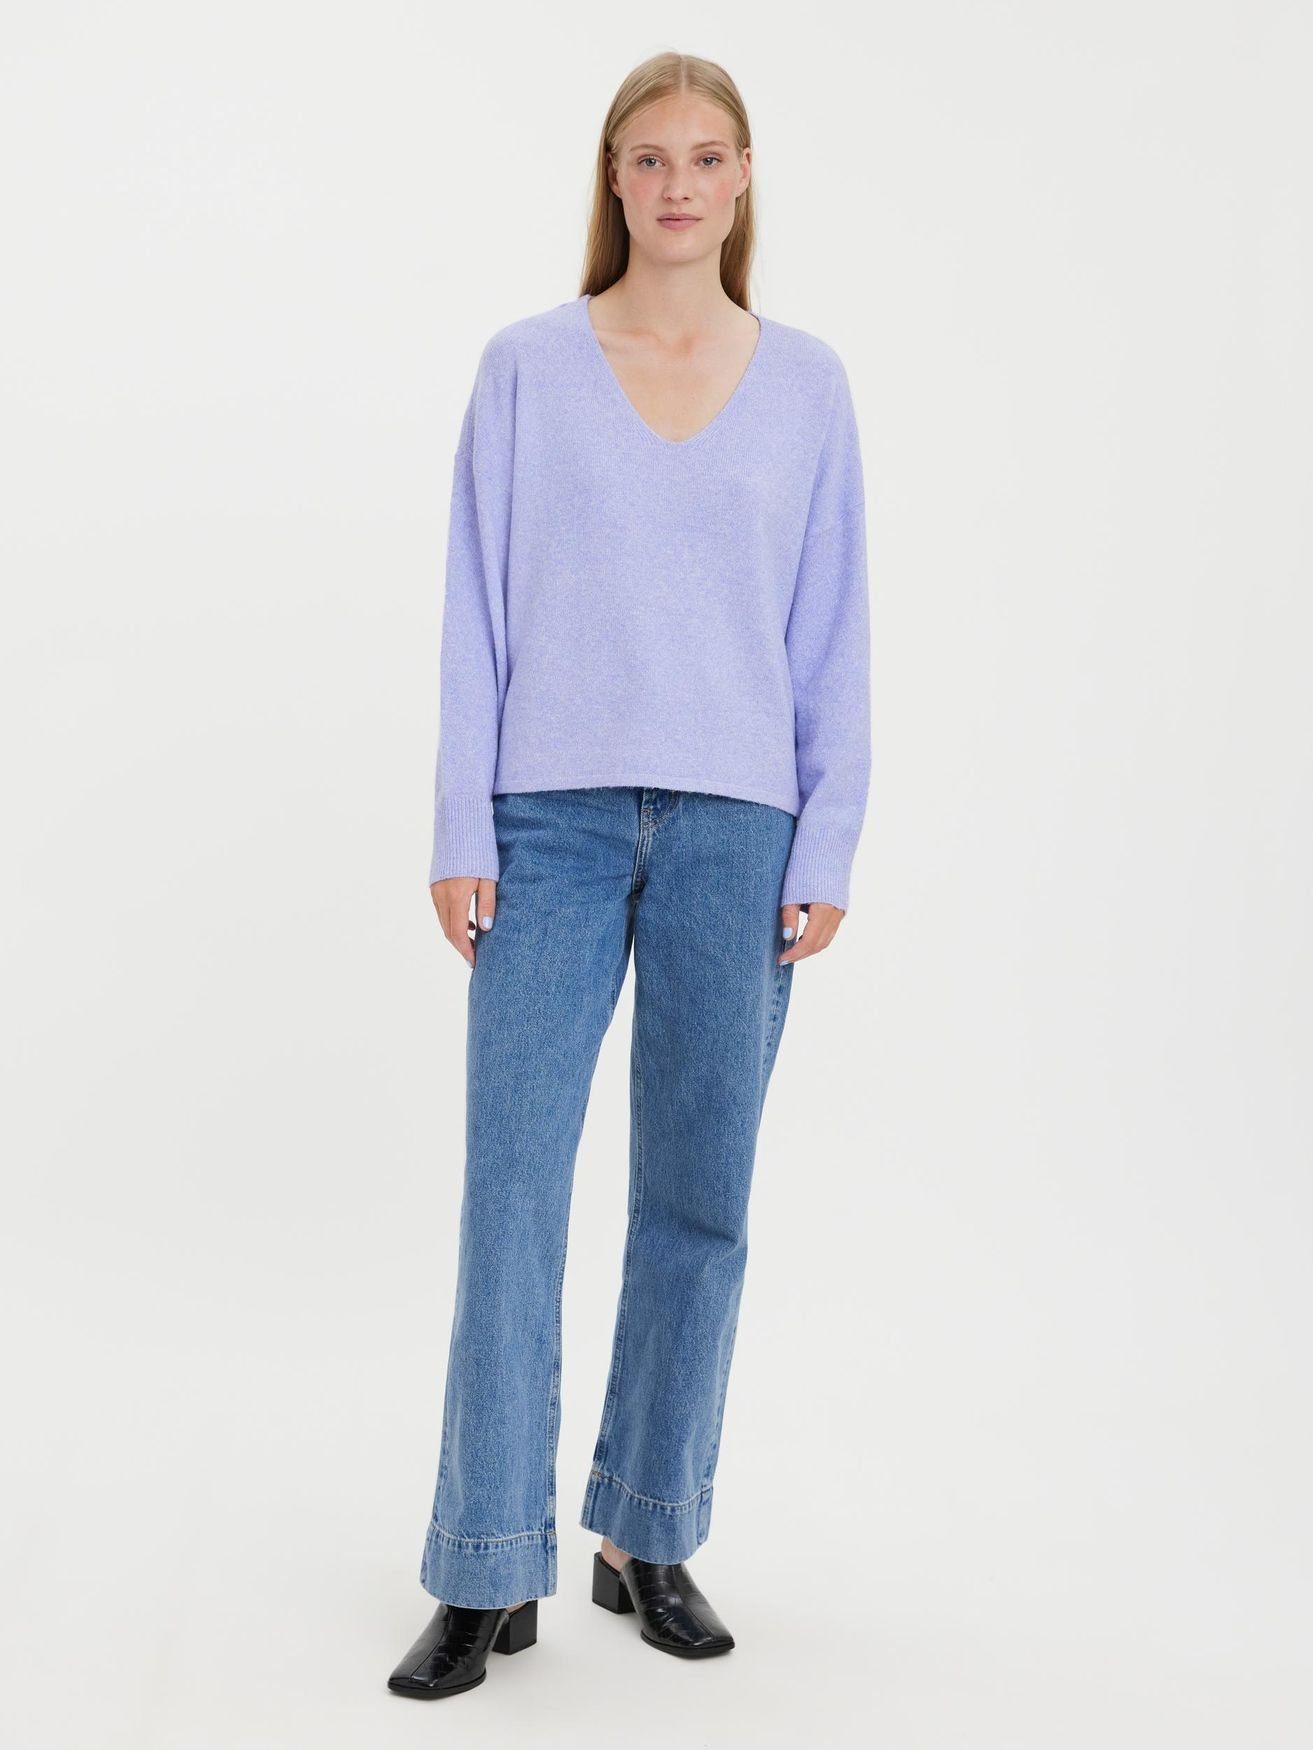 4852 Pullover Langarm Feinstrick Lavendel in Vero Strickpullover VMDOFFY Moda V-Ausschnitt Sweater